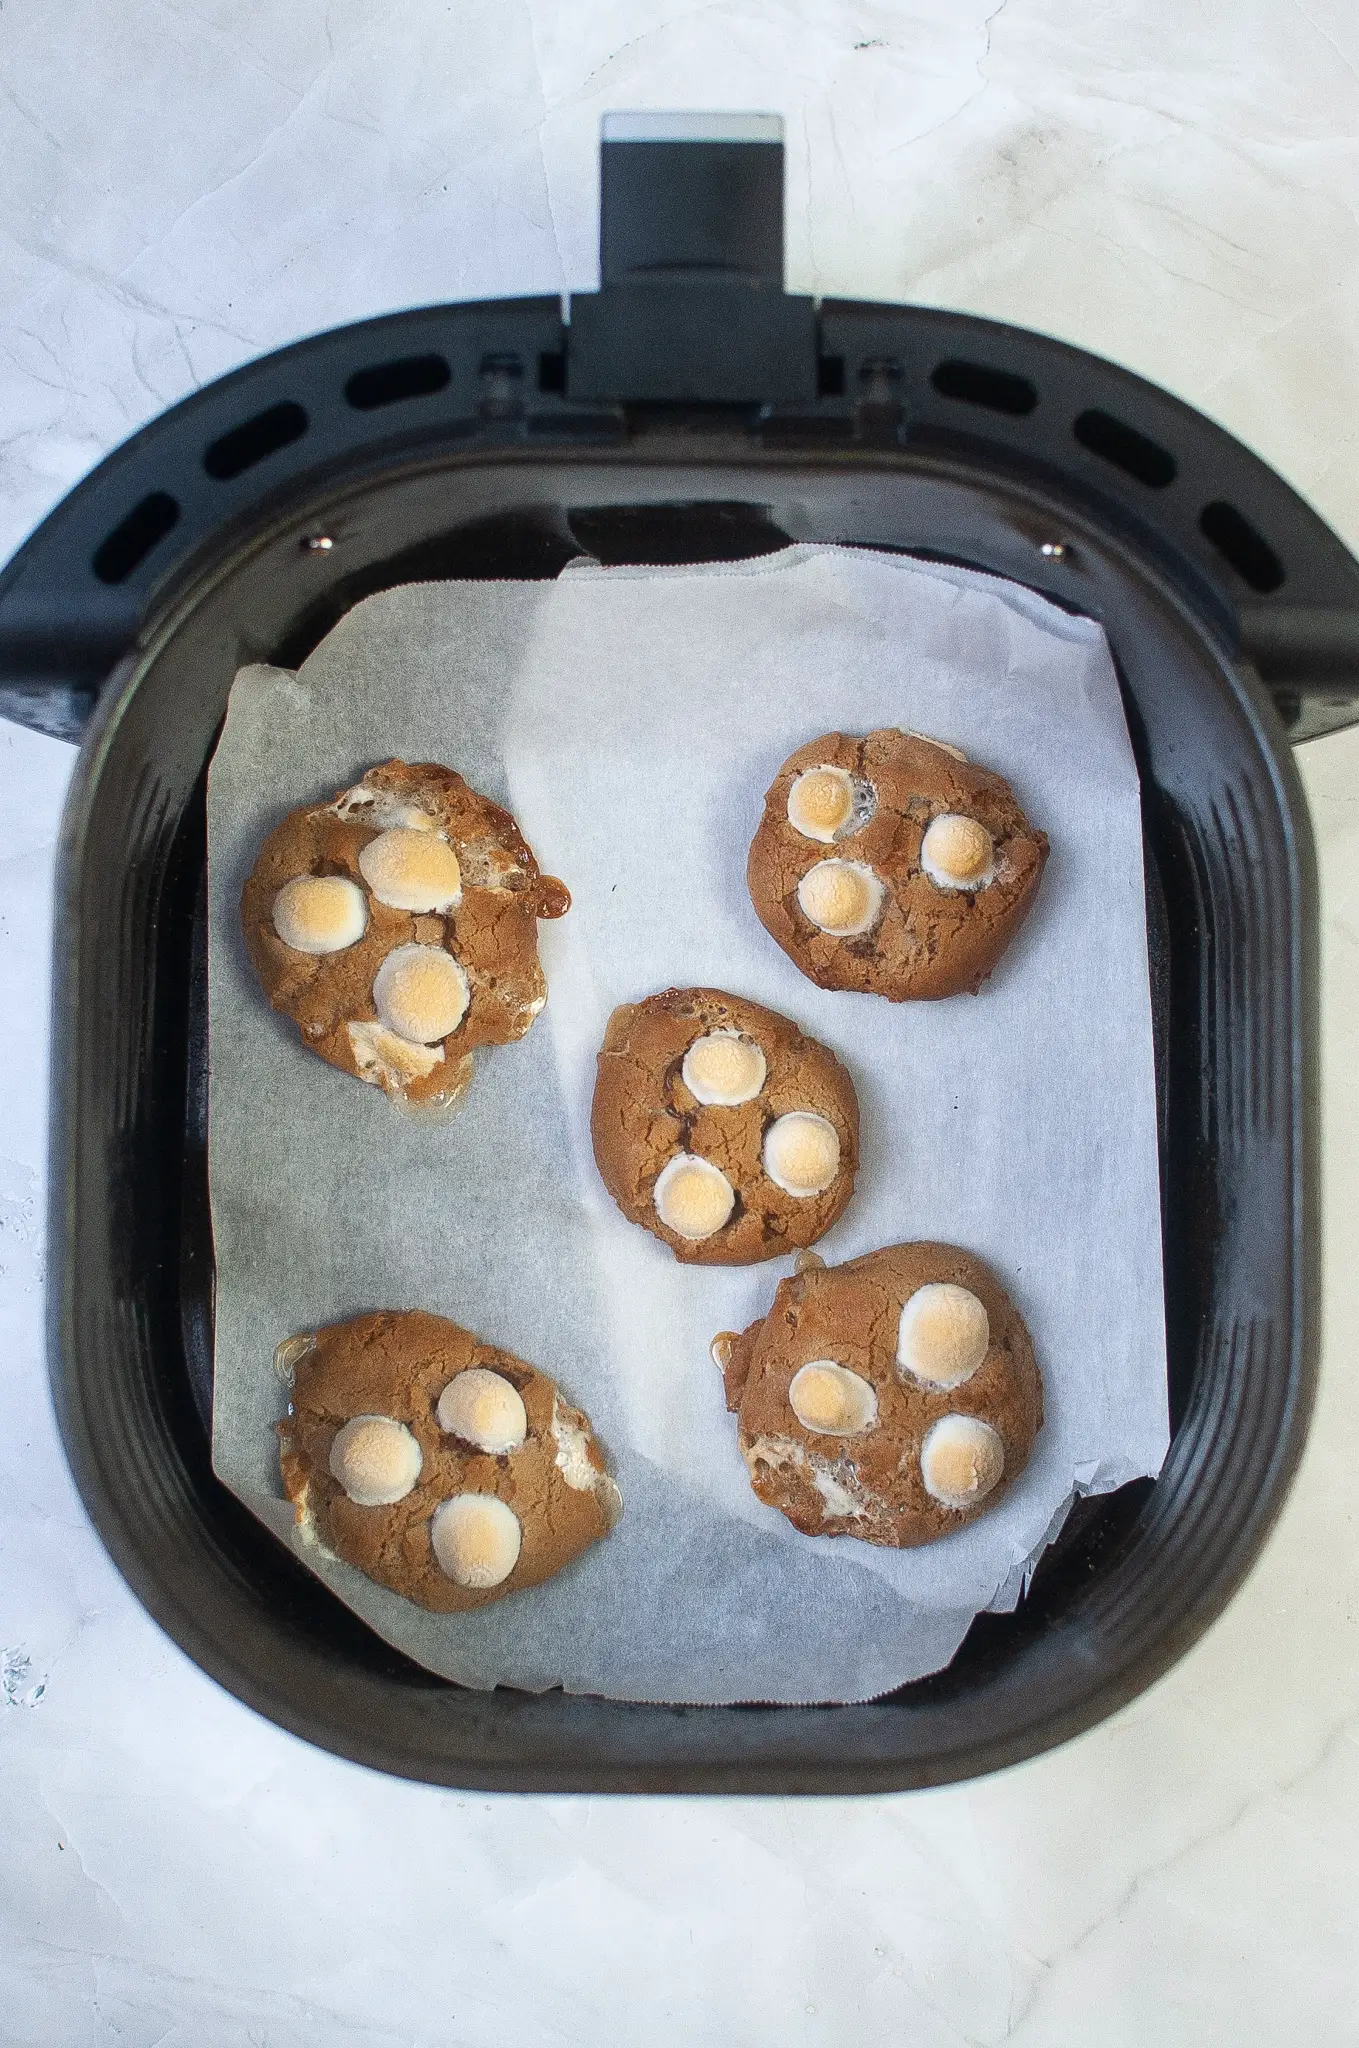 Cookies cooked in air fryer.